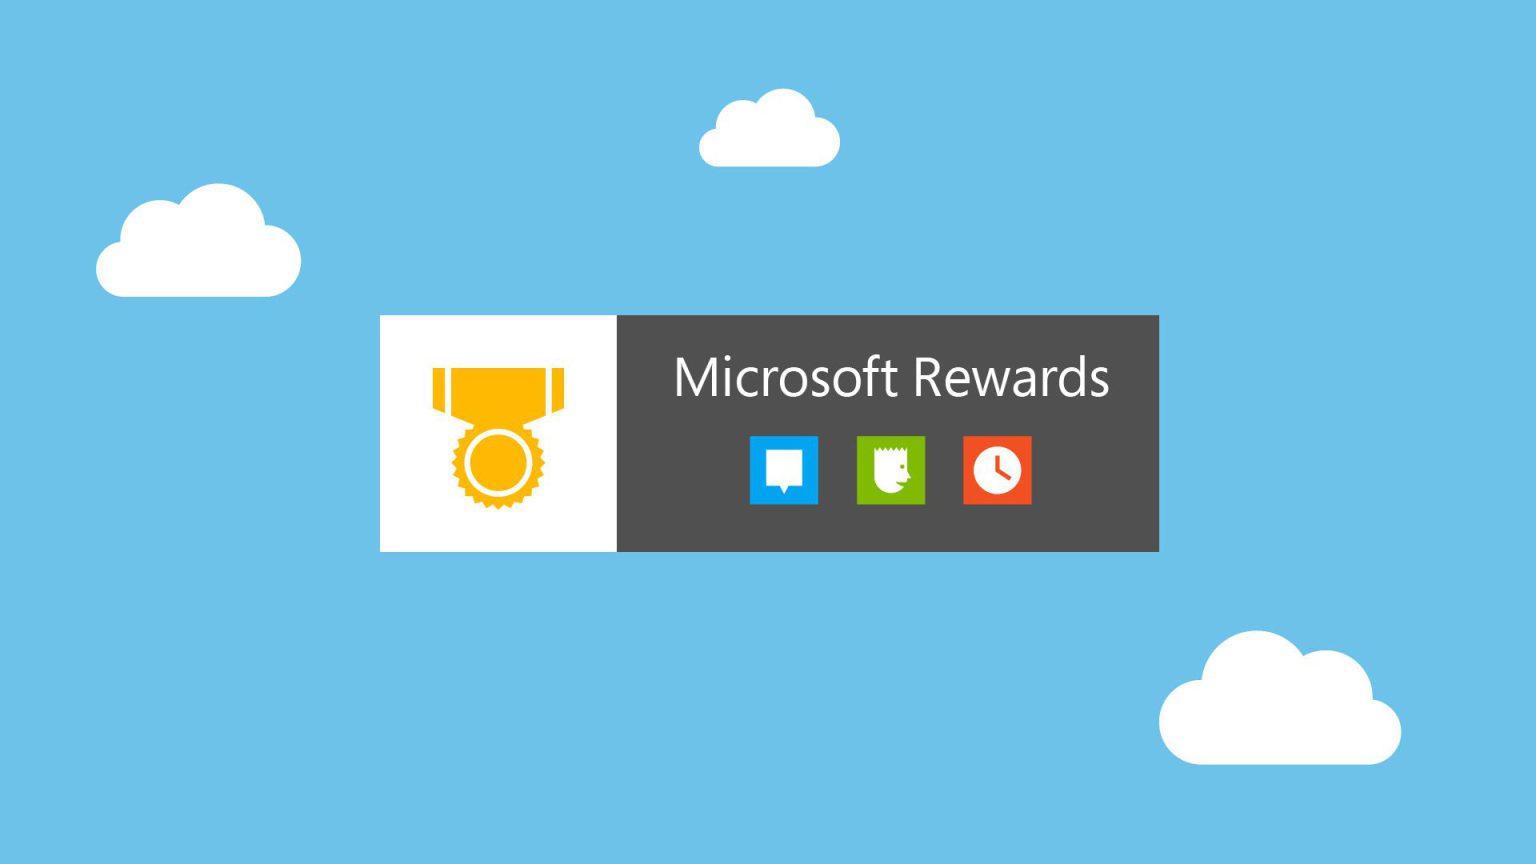 microsoft rewards